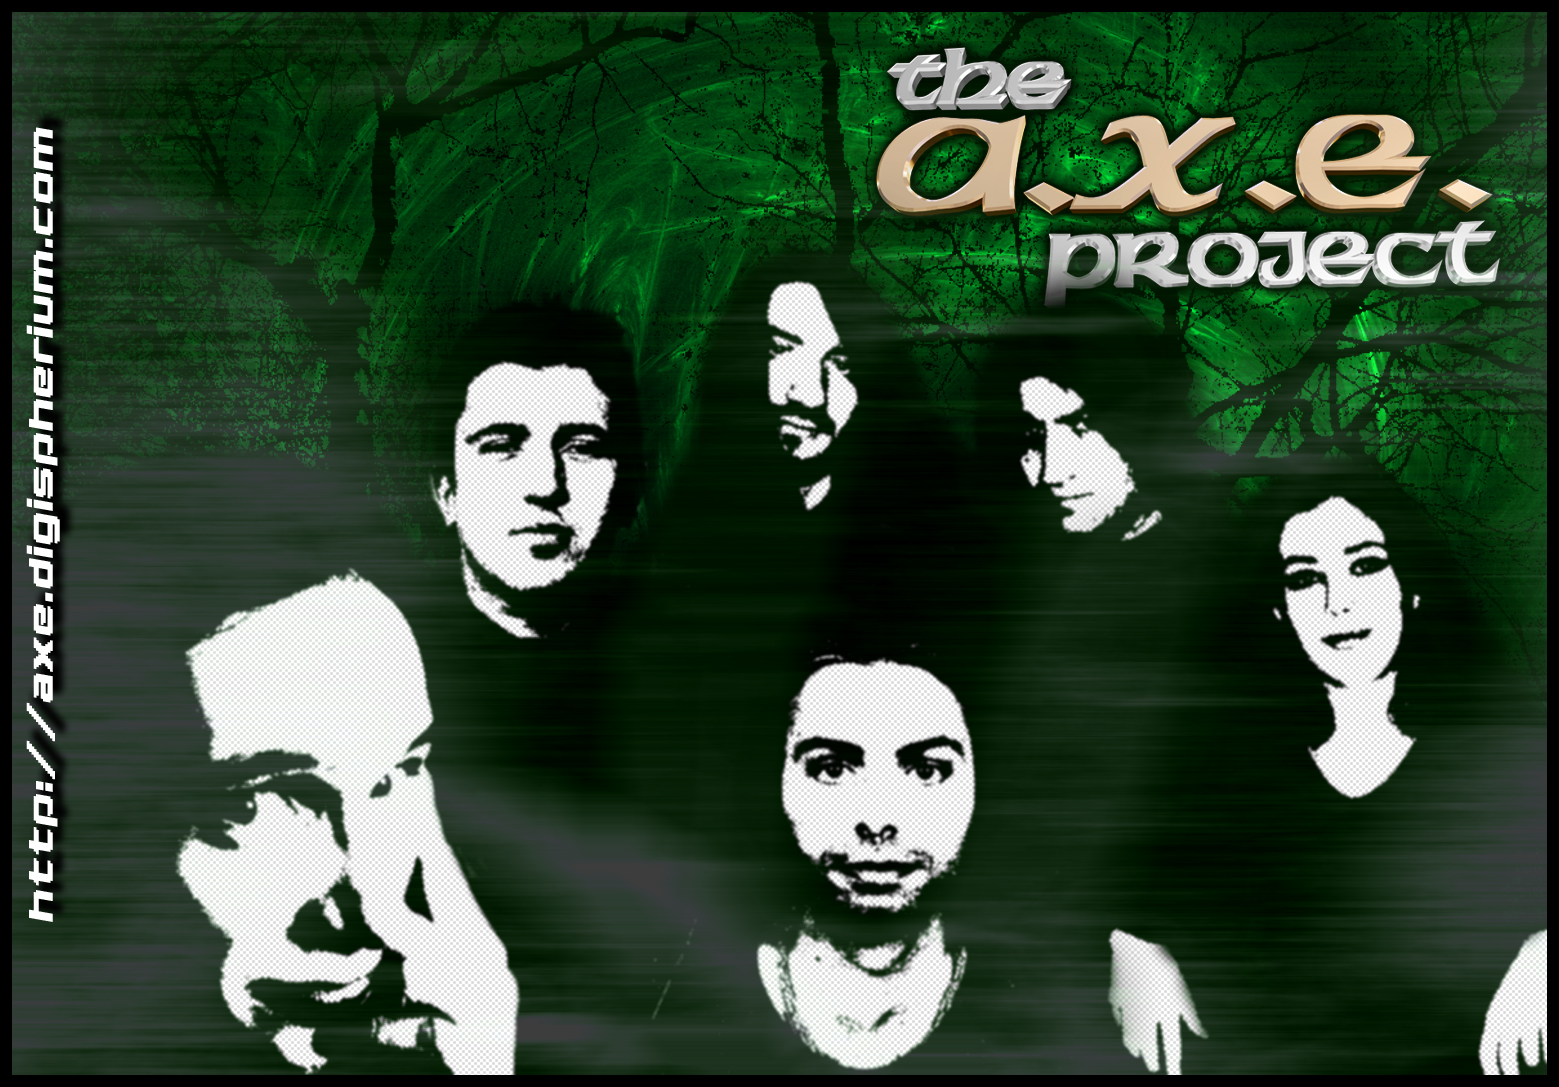 the a.x.e. project